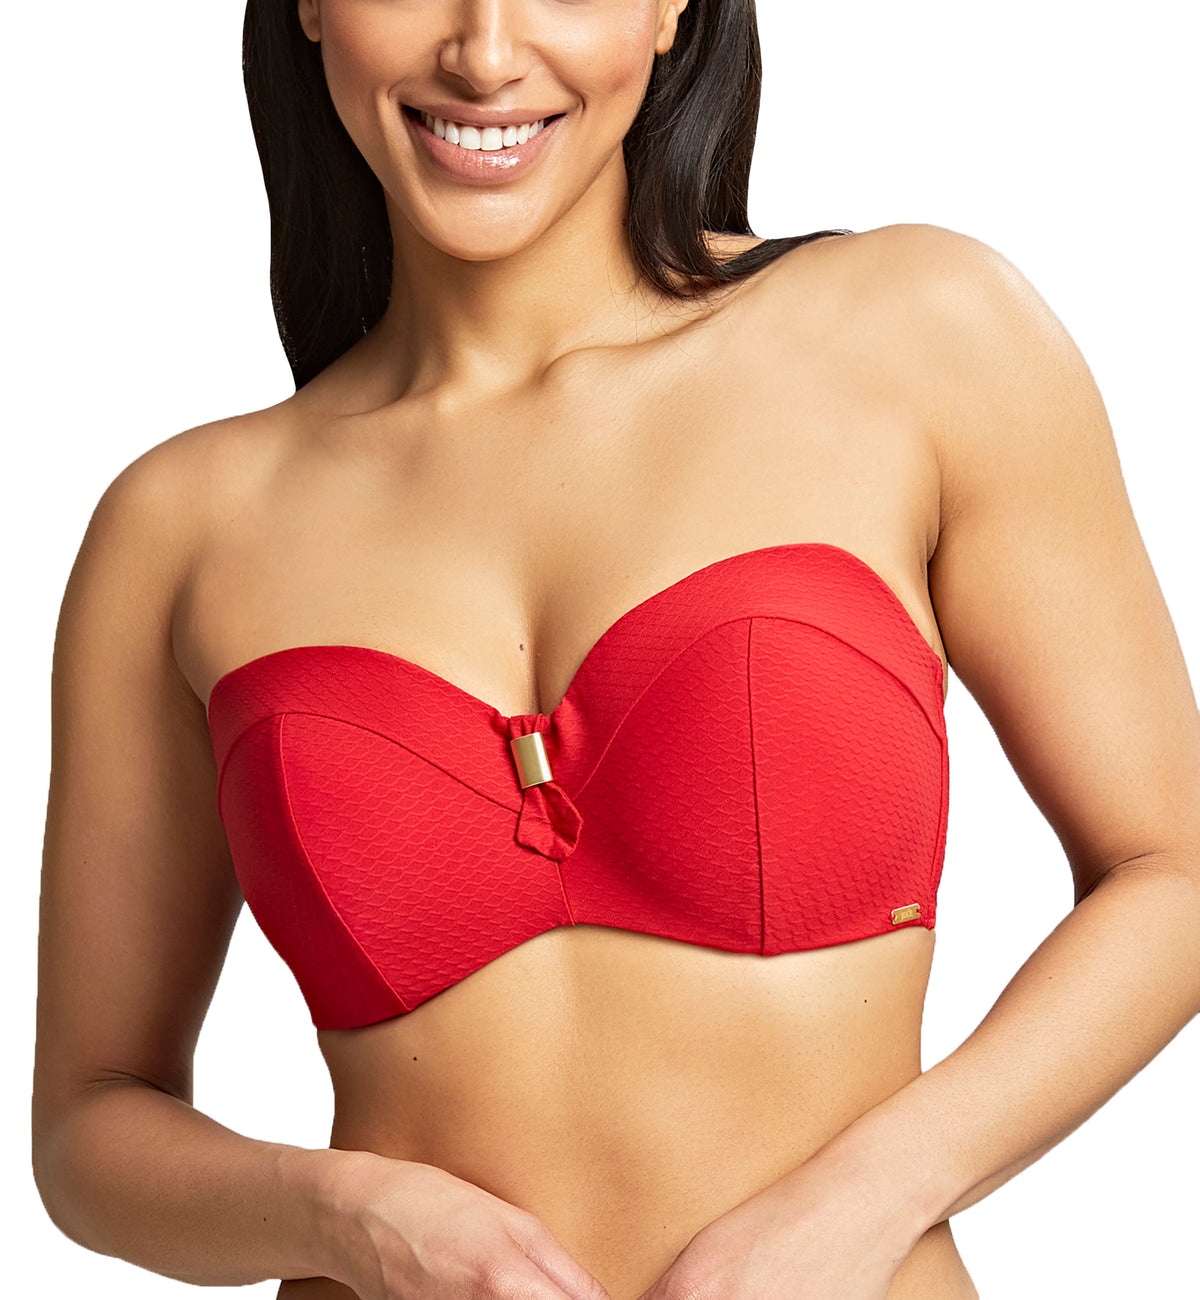 Panache Marianna Underwire Bandeau Bikini Top (SW1593),30D,Crimson - Crimson,30D